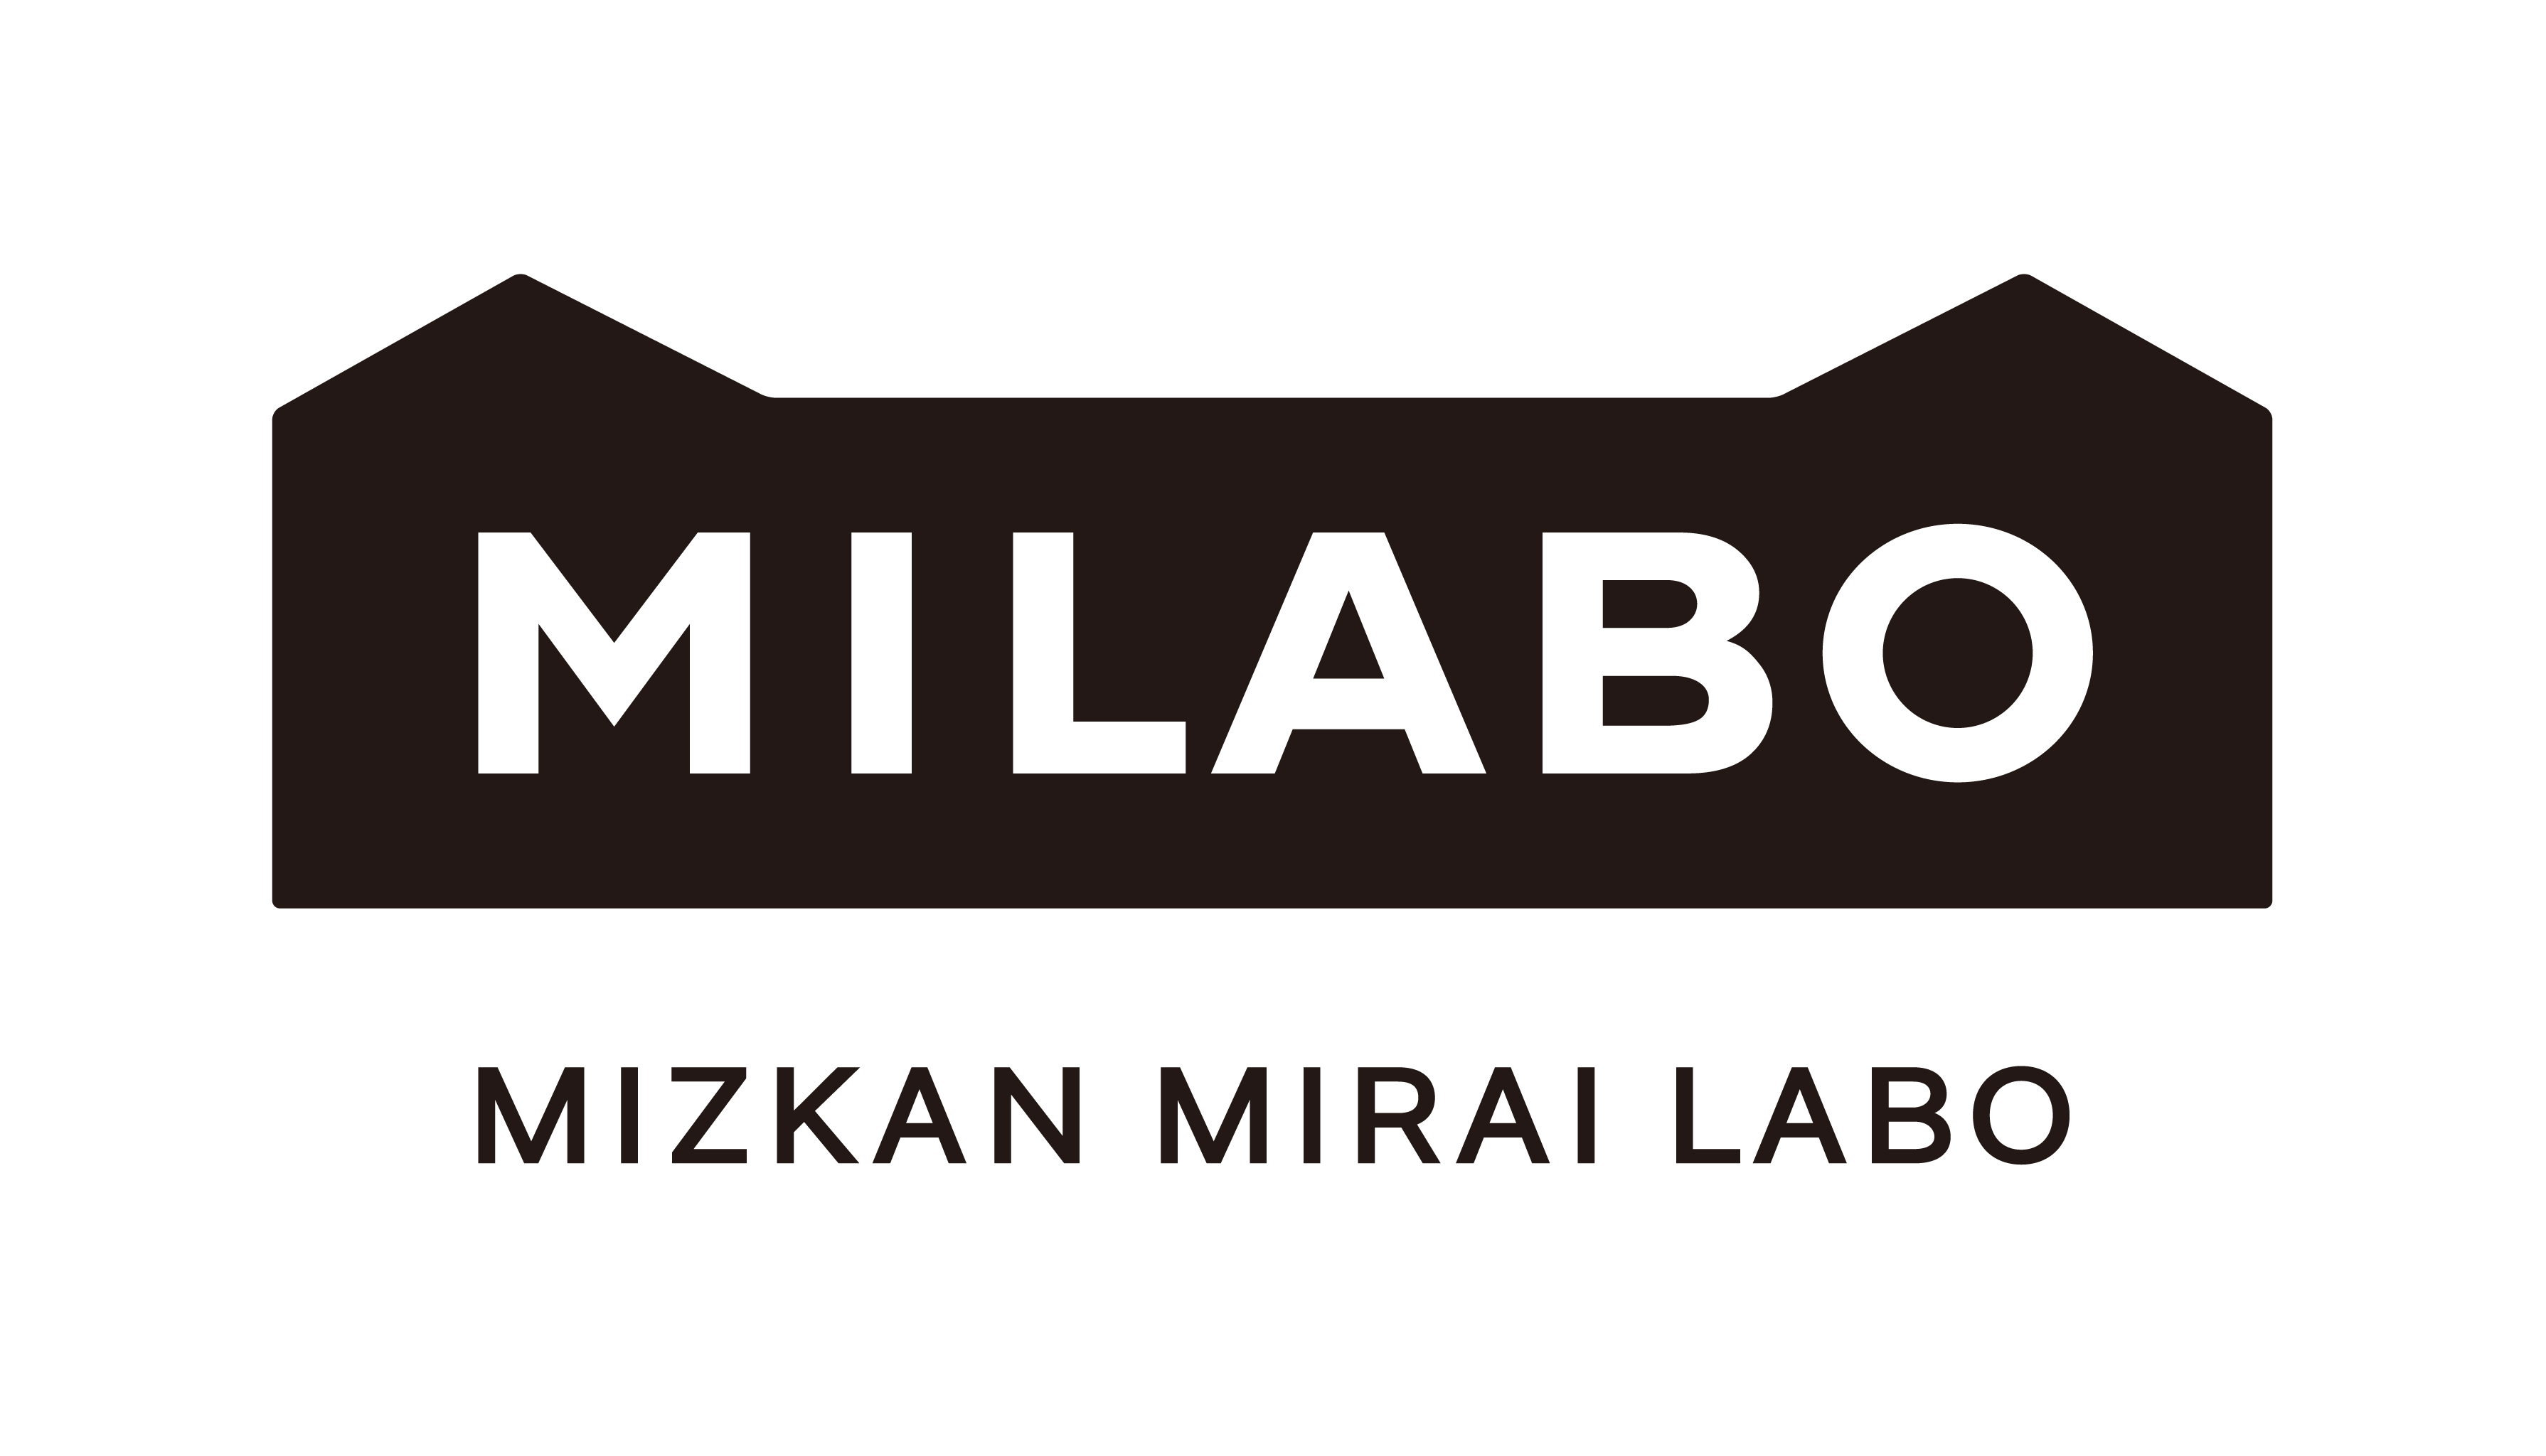 Establishes MIZKAN MIRAI LABO (MILABO)